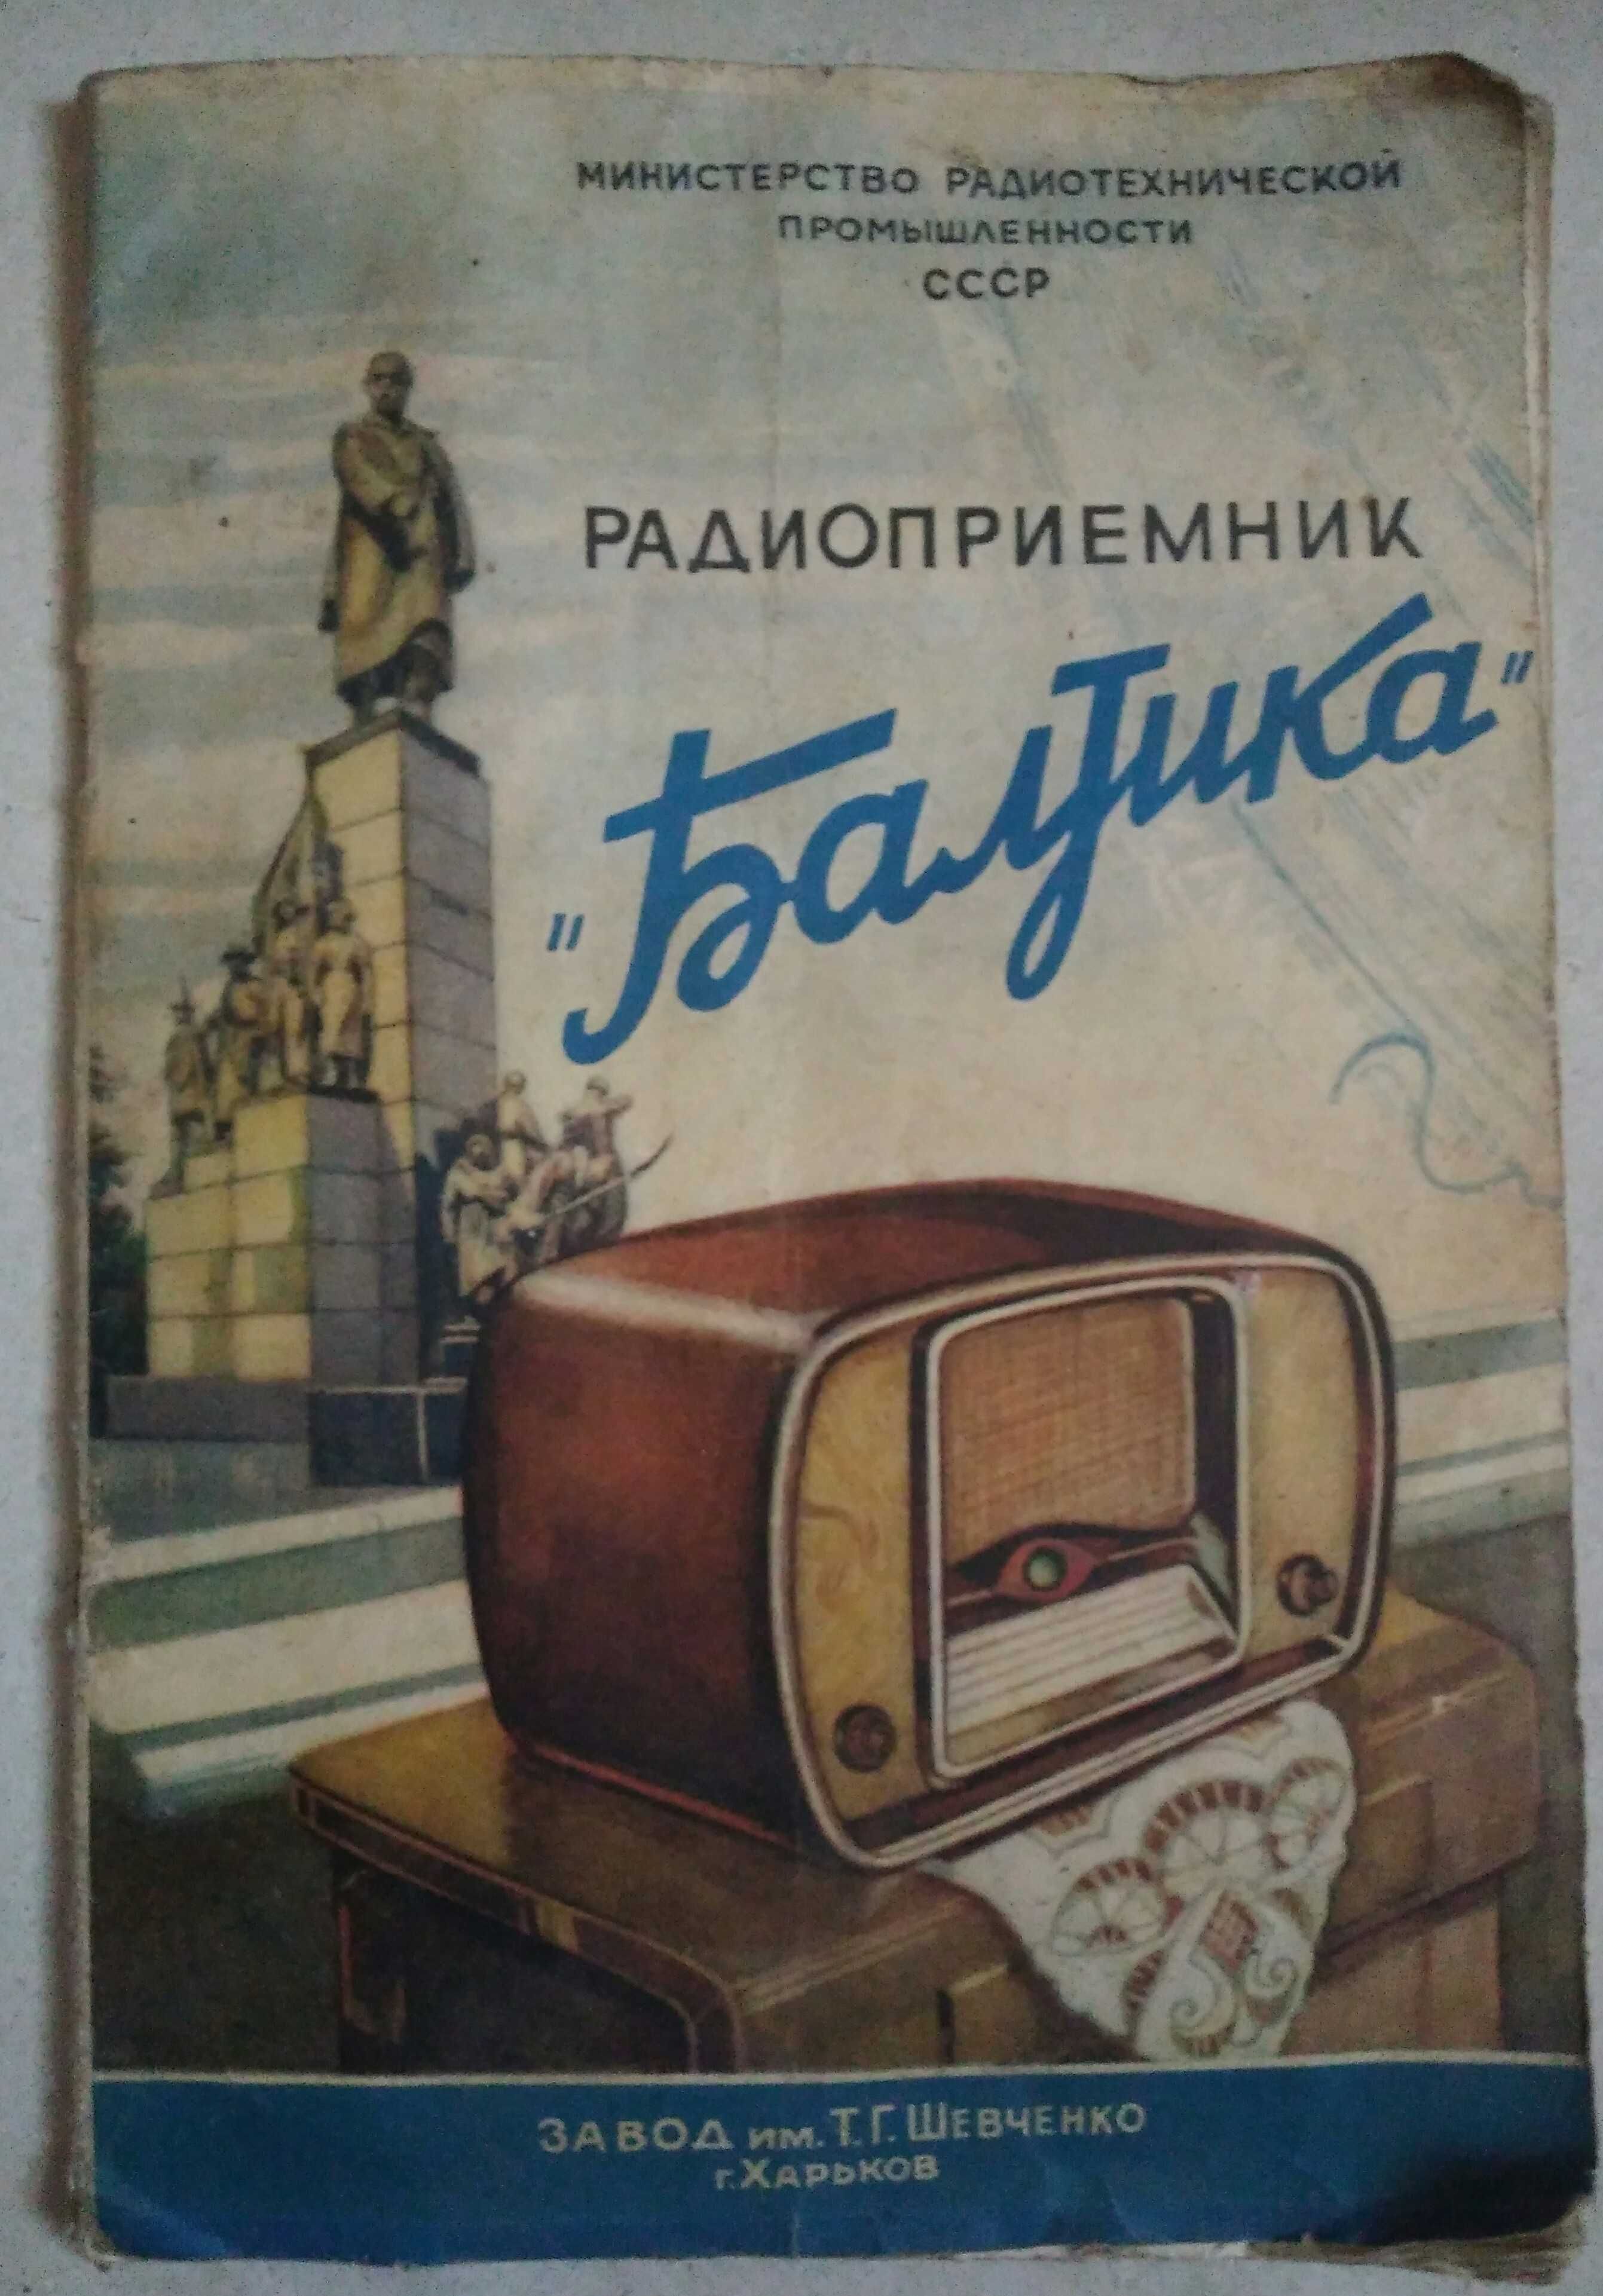 Радиоприемник Балтика ЗИШ, производство СССР, с документами.